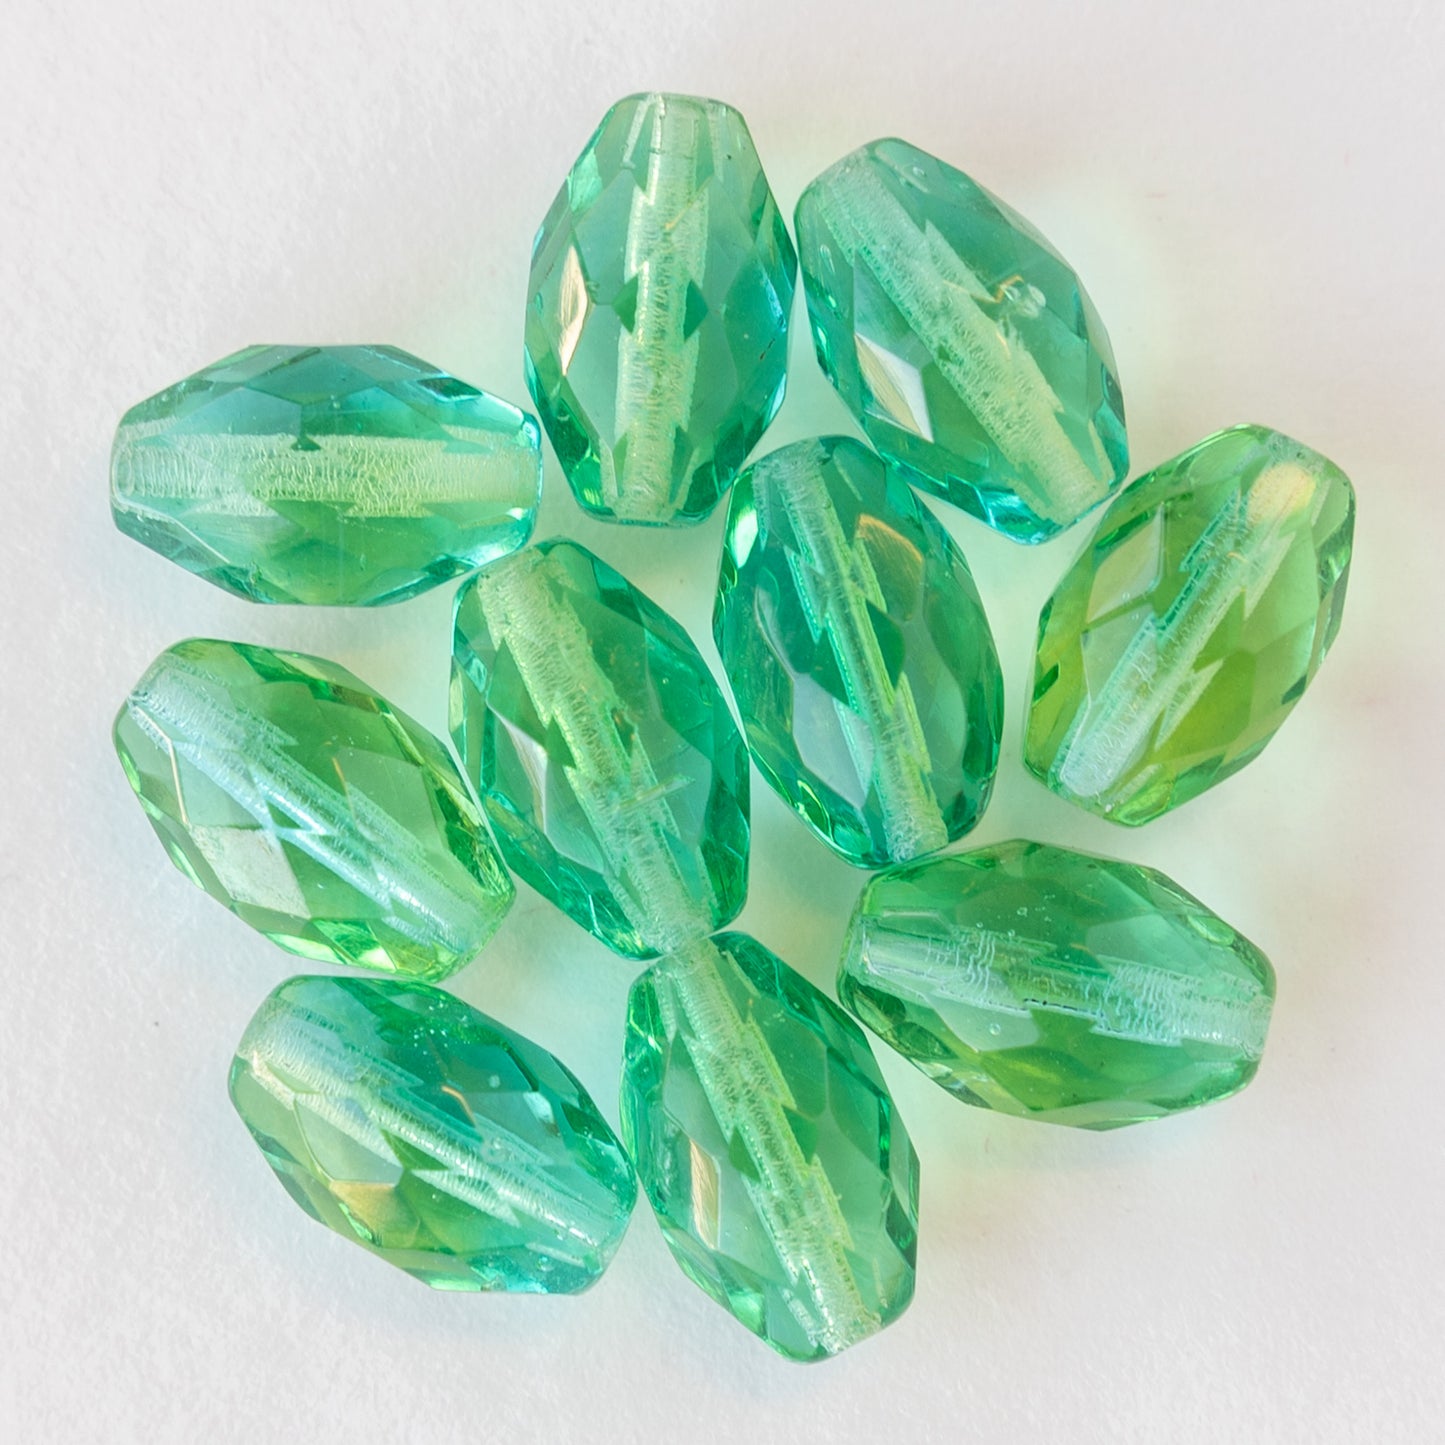 12x8mm Firepolished Glass Oval Beads - Aqua Green Mix - 10 beads